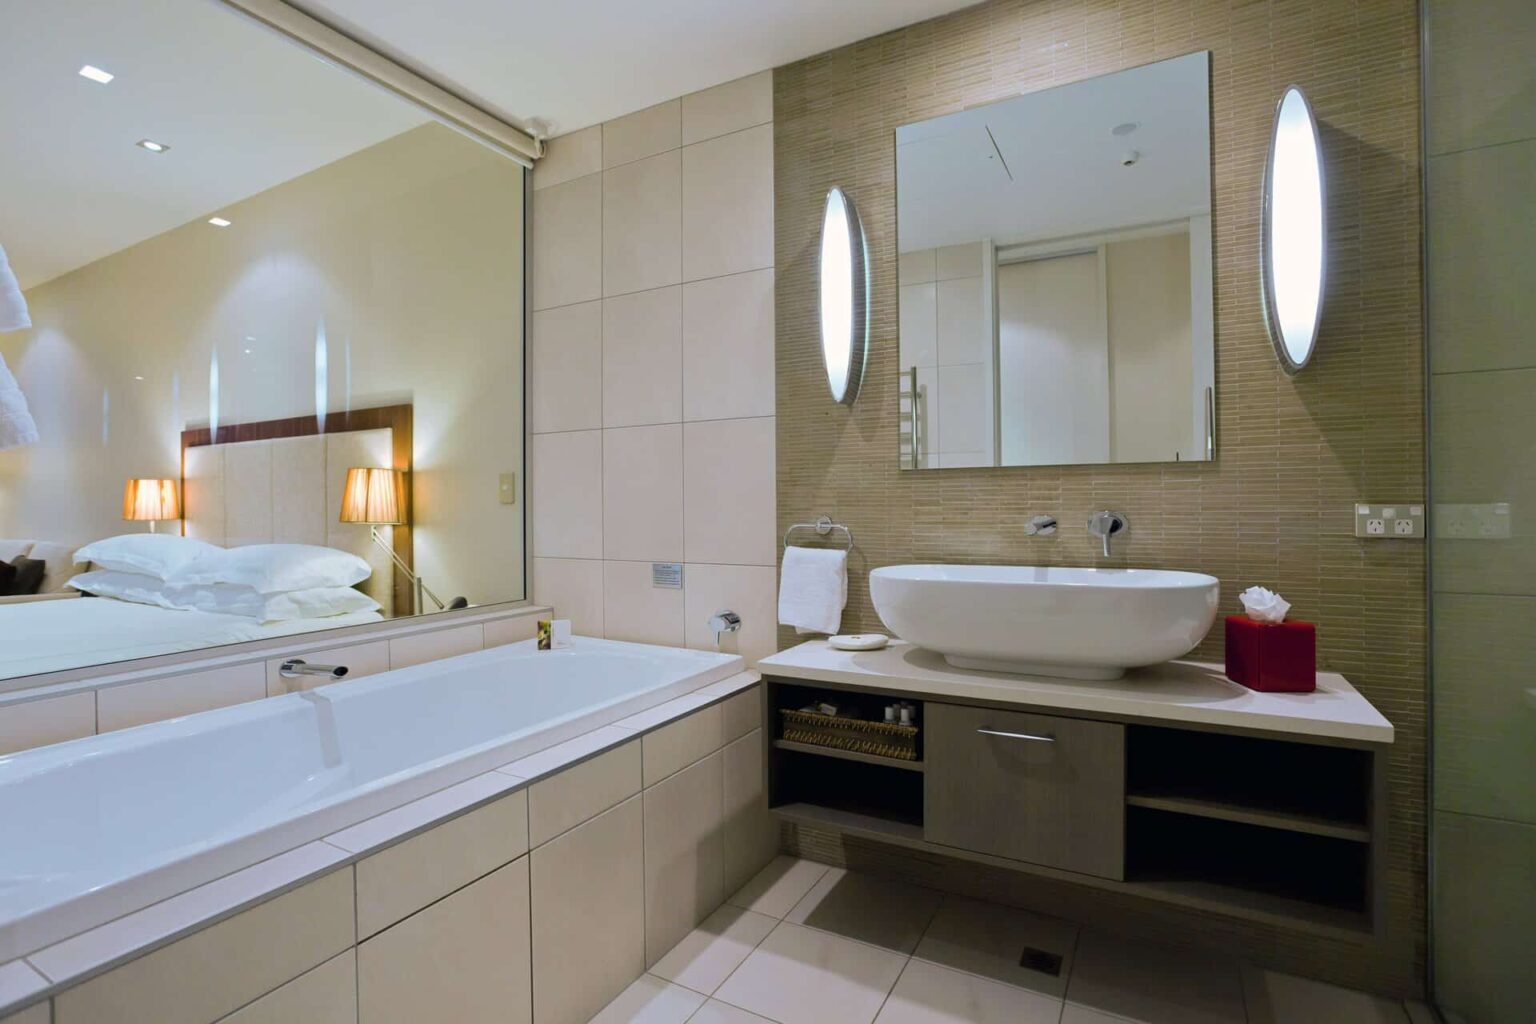 Superior 3 Bedroom Apartment bathroom with spa tub